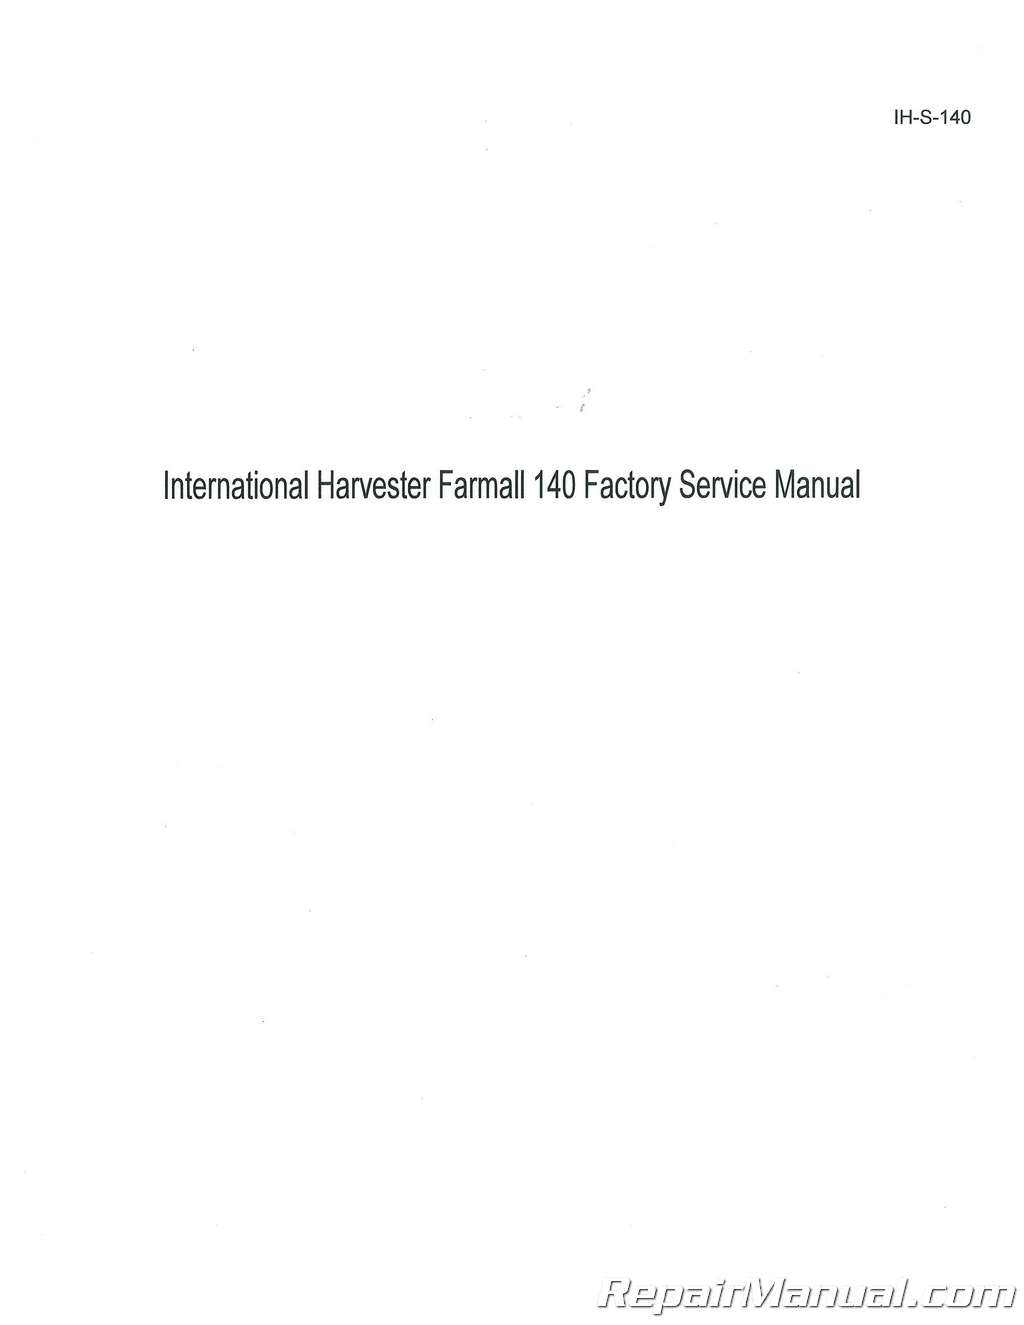 Operators Manual Fits Farmall International Harvester 140 Models RAP73112 RAP731 